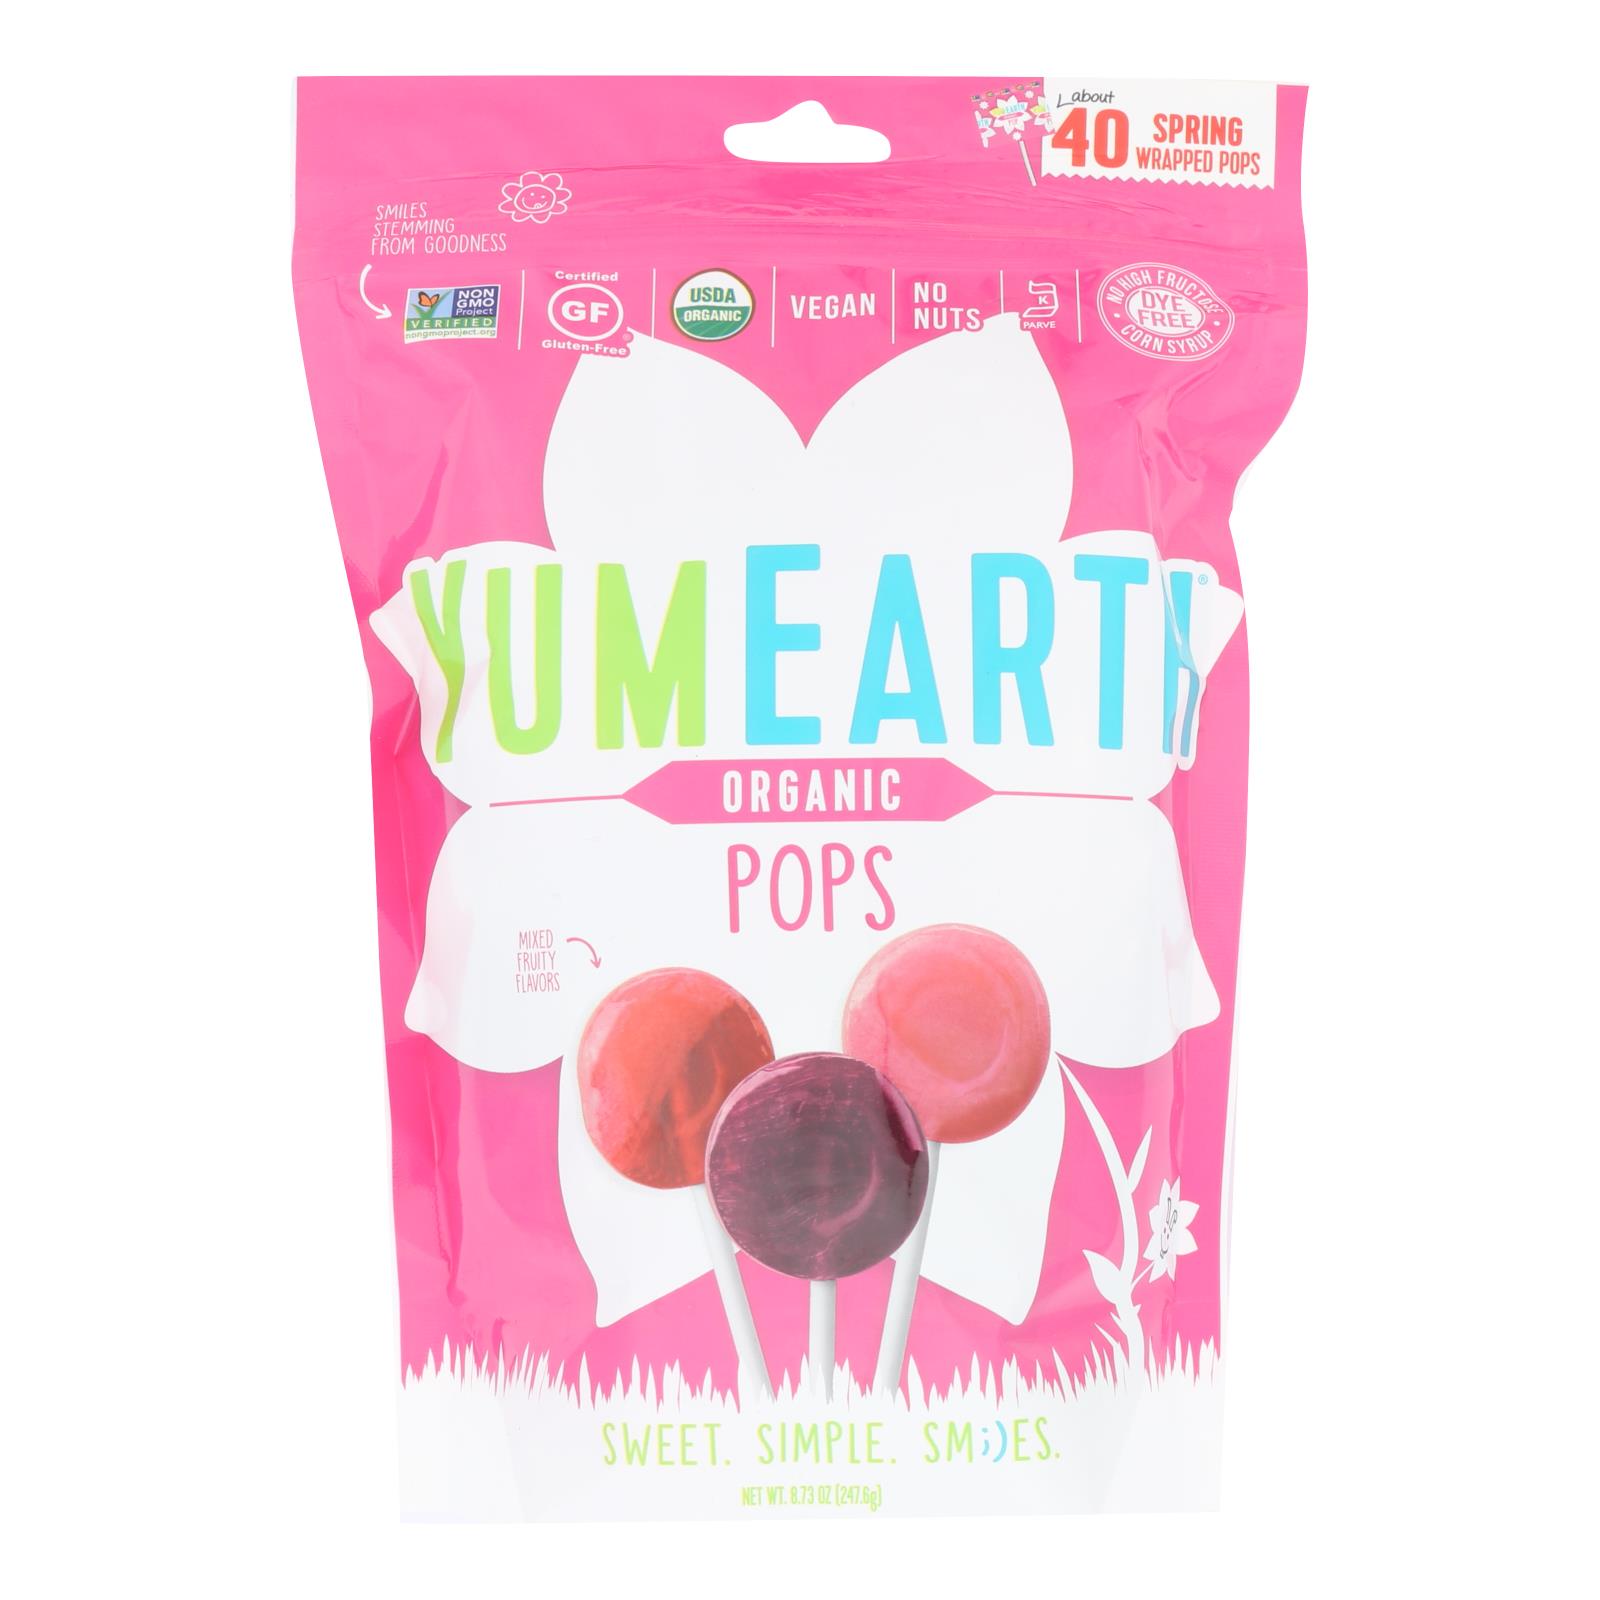 Yumearth - Fruit Pop Easter - 18개 묶음상품 - 8.73 OZ